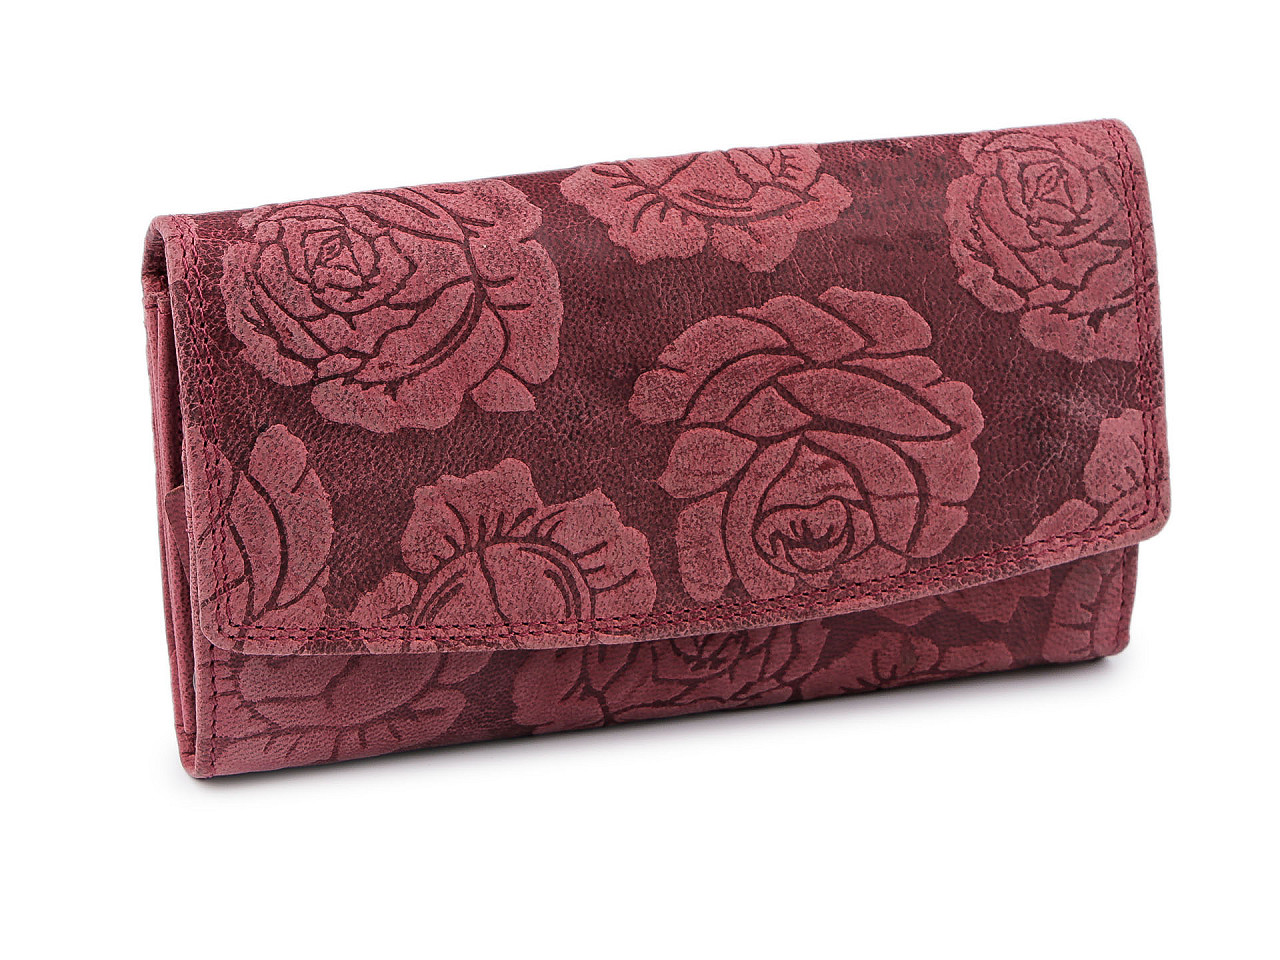 Damen-Geldbörse aus Leder, rosa, Ornamente, 9,5 x 18 cm, altrosa, 1 Stück